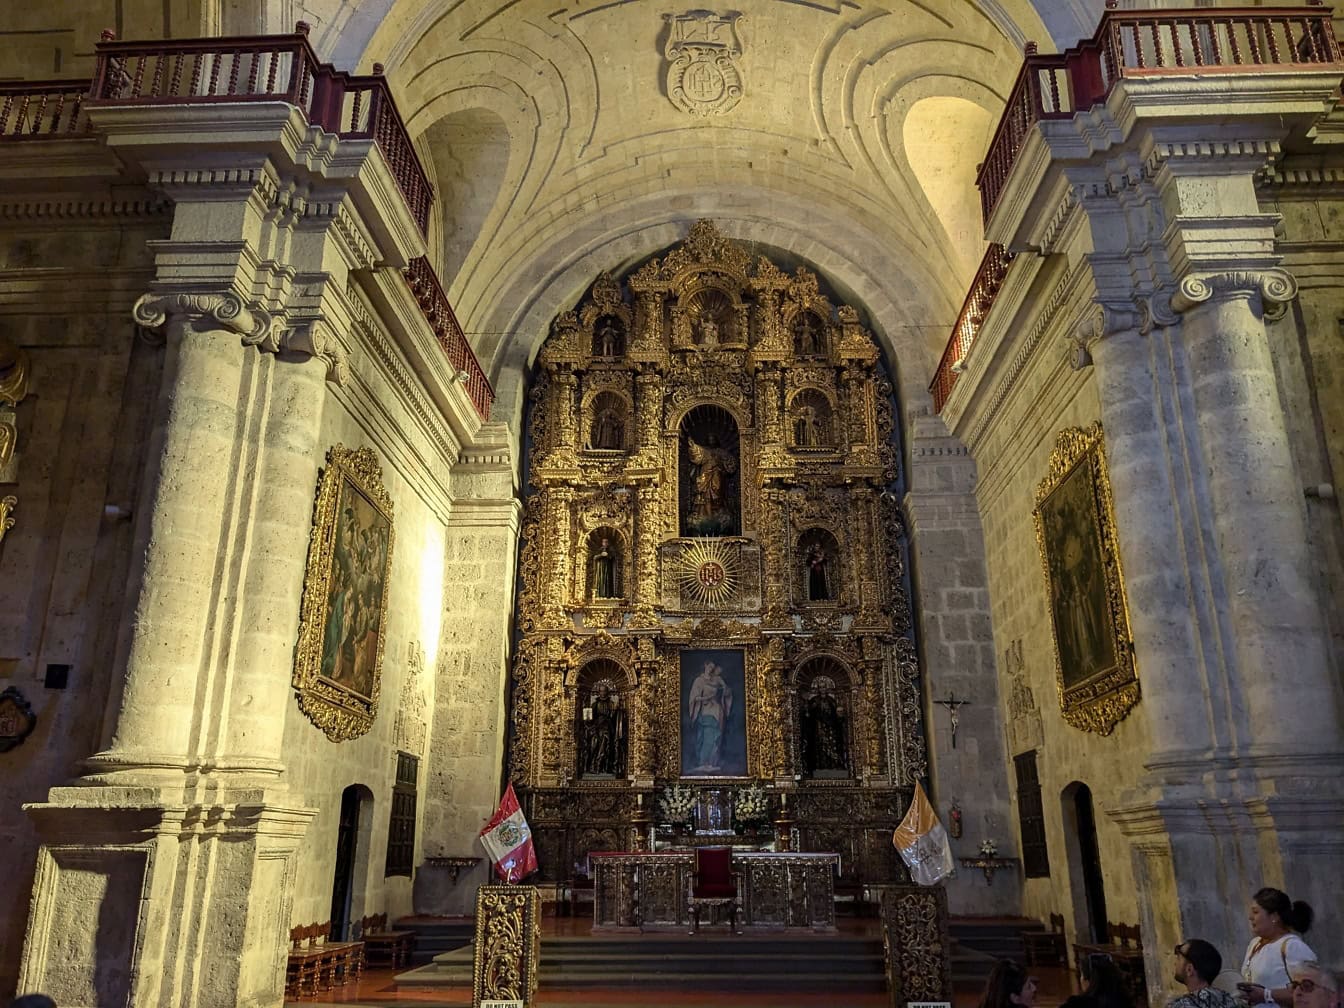 Veliki ukrašeni oltar s ikonama u crkvi Družbe Isusove Arequipe u Peruu, Latinska Amerika